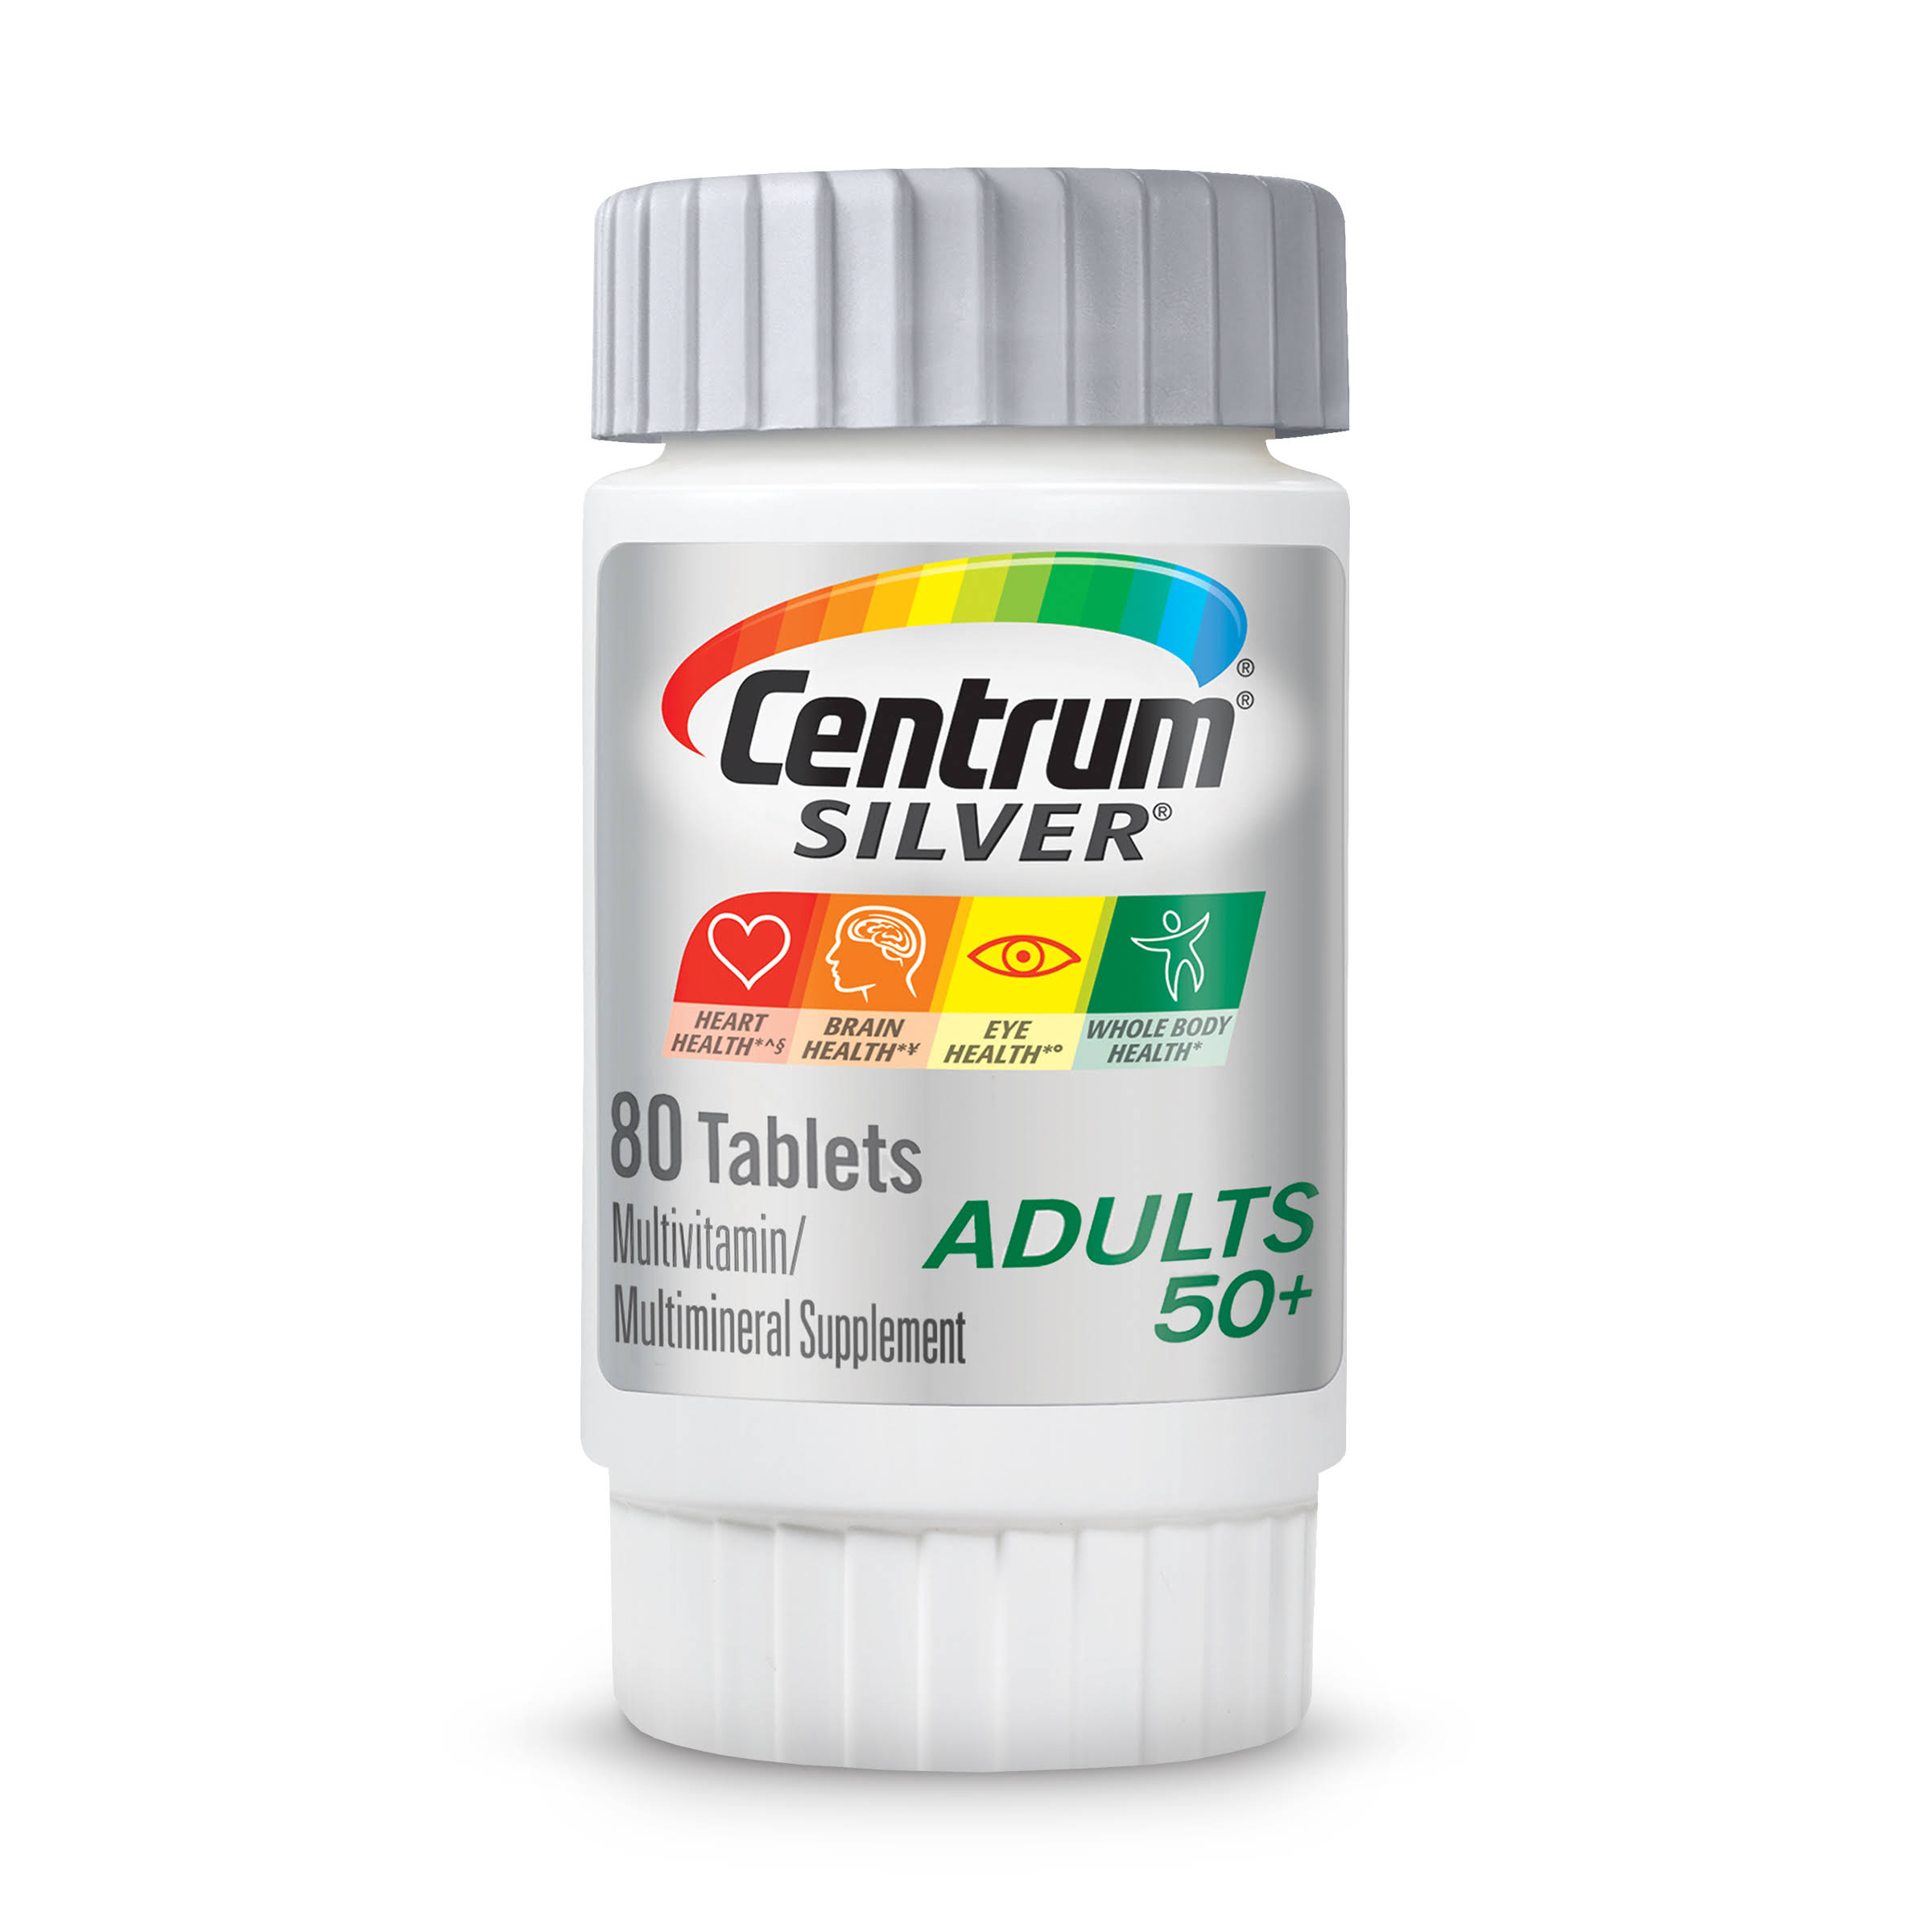 Centrum Silver Adult Multivitamin Multimineral Supplement - 80ct